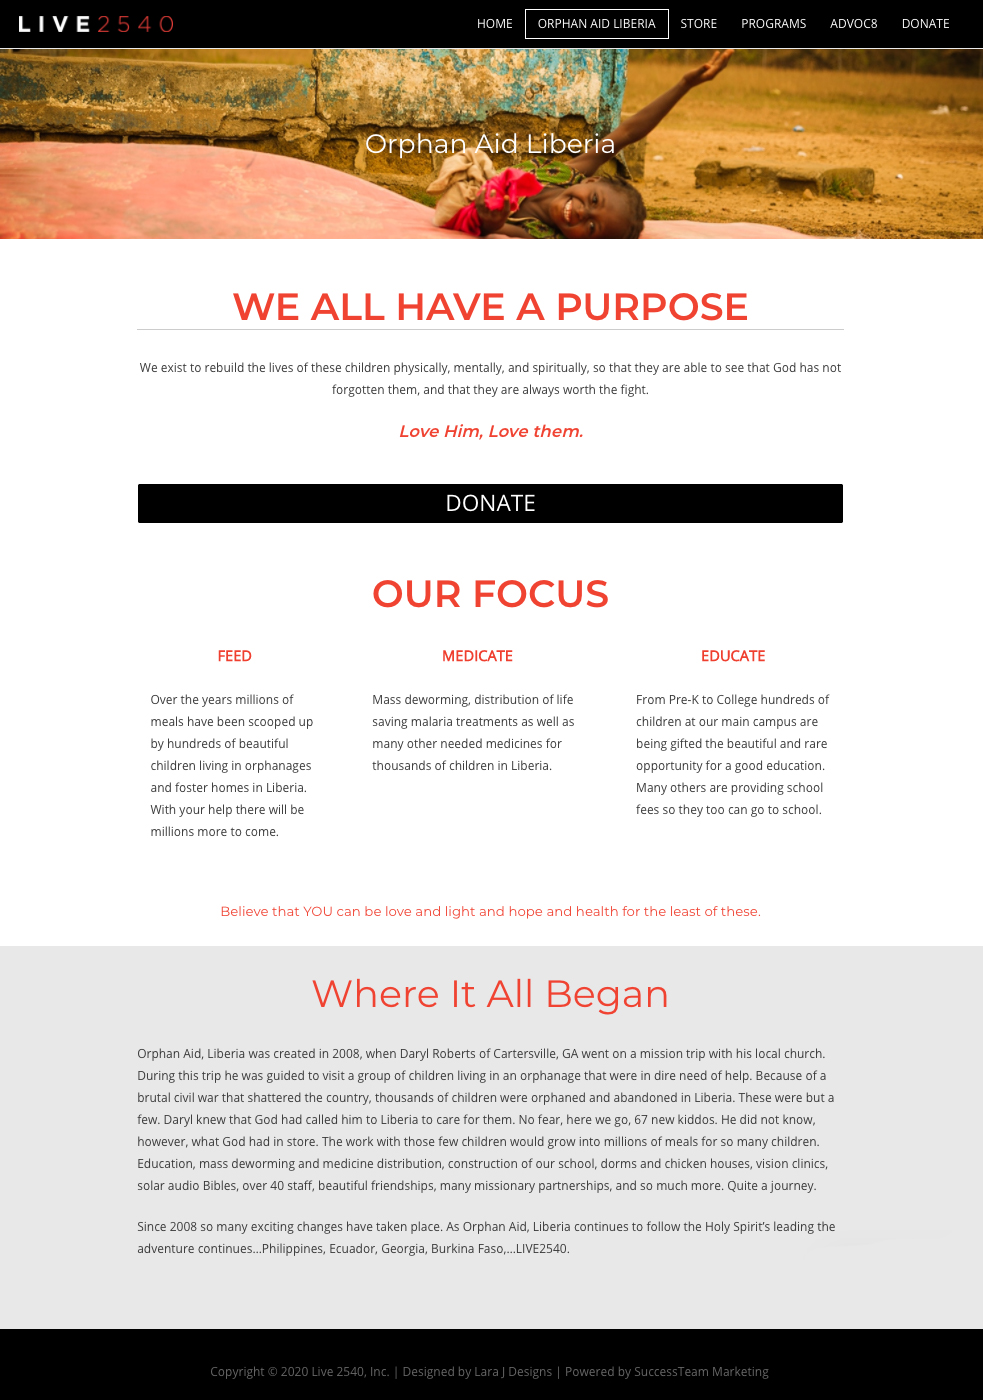 Orphan Aid Liberia Website Home Page Design